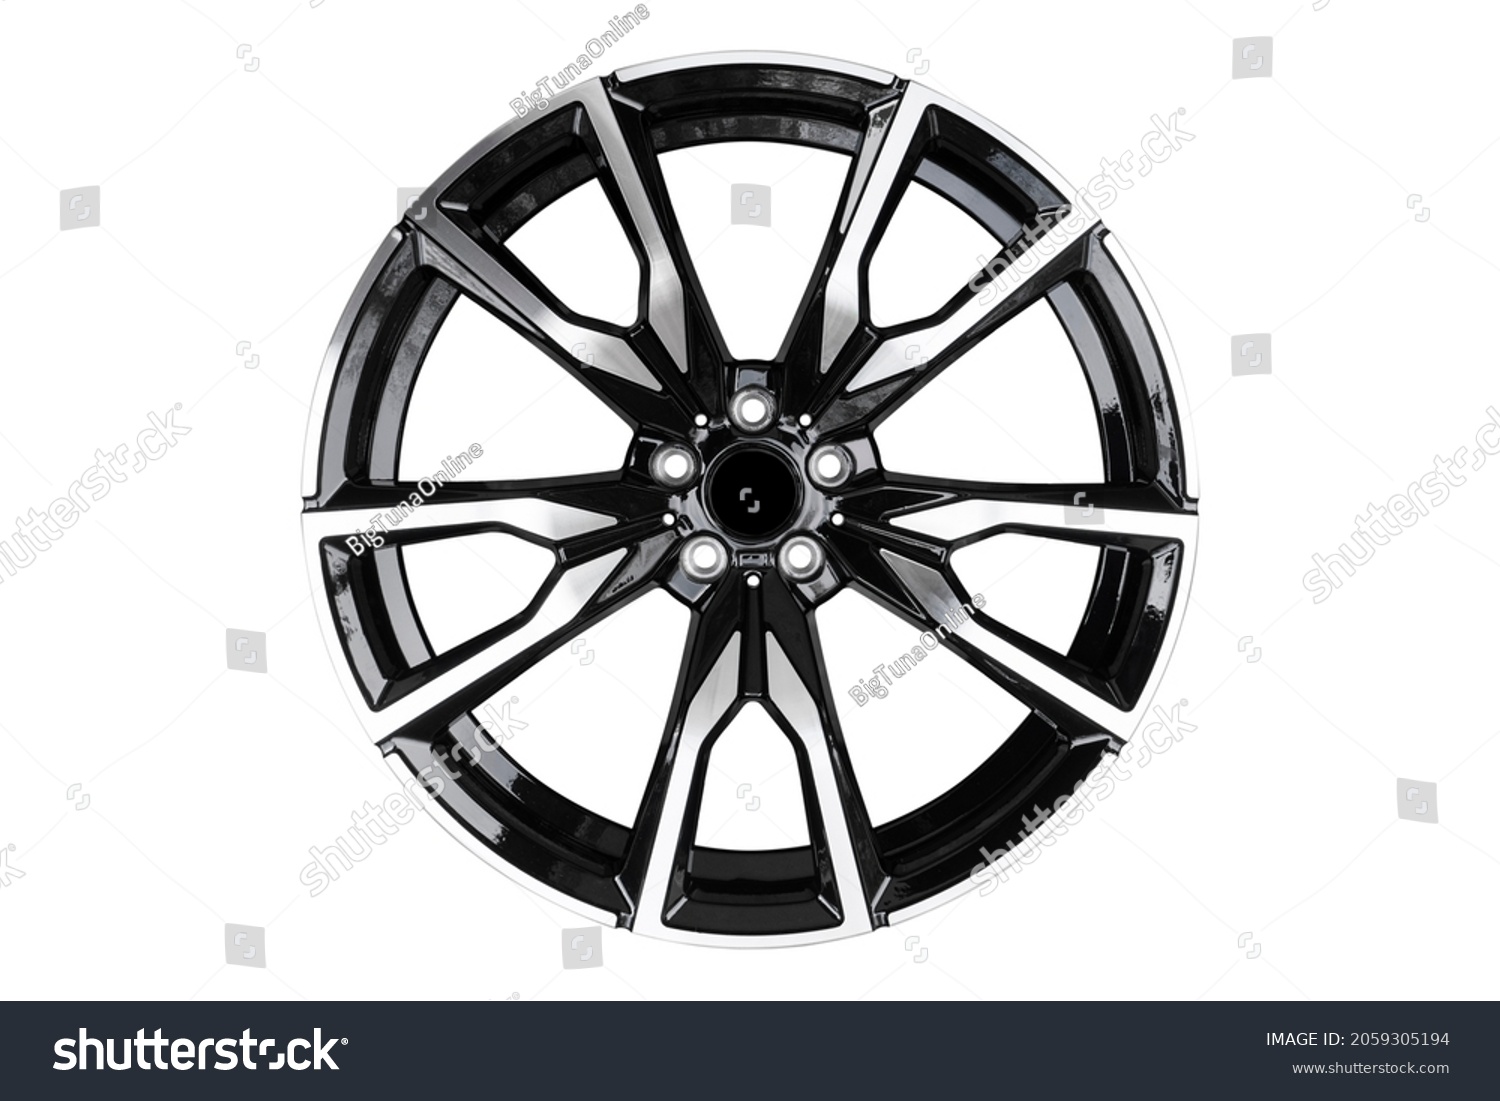 Car alloy wheel isolated on white background. New alloy wheel for a car on a white background. Alloy rim isolated. Car wheel disc. #2059305194